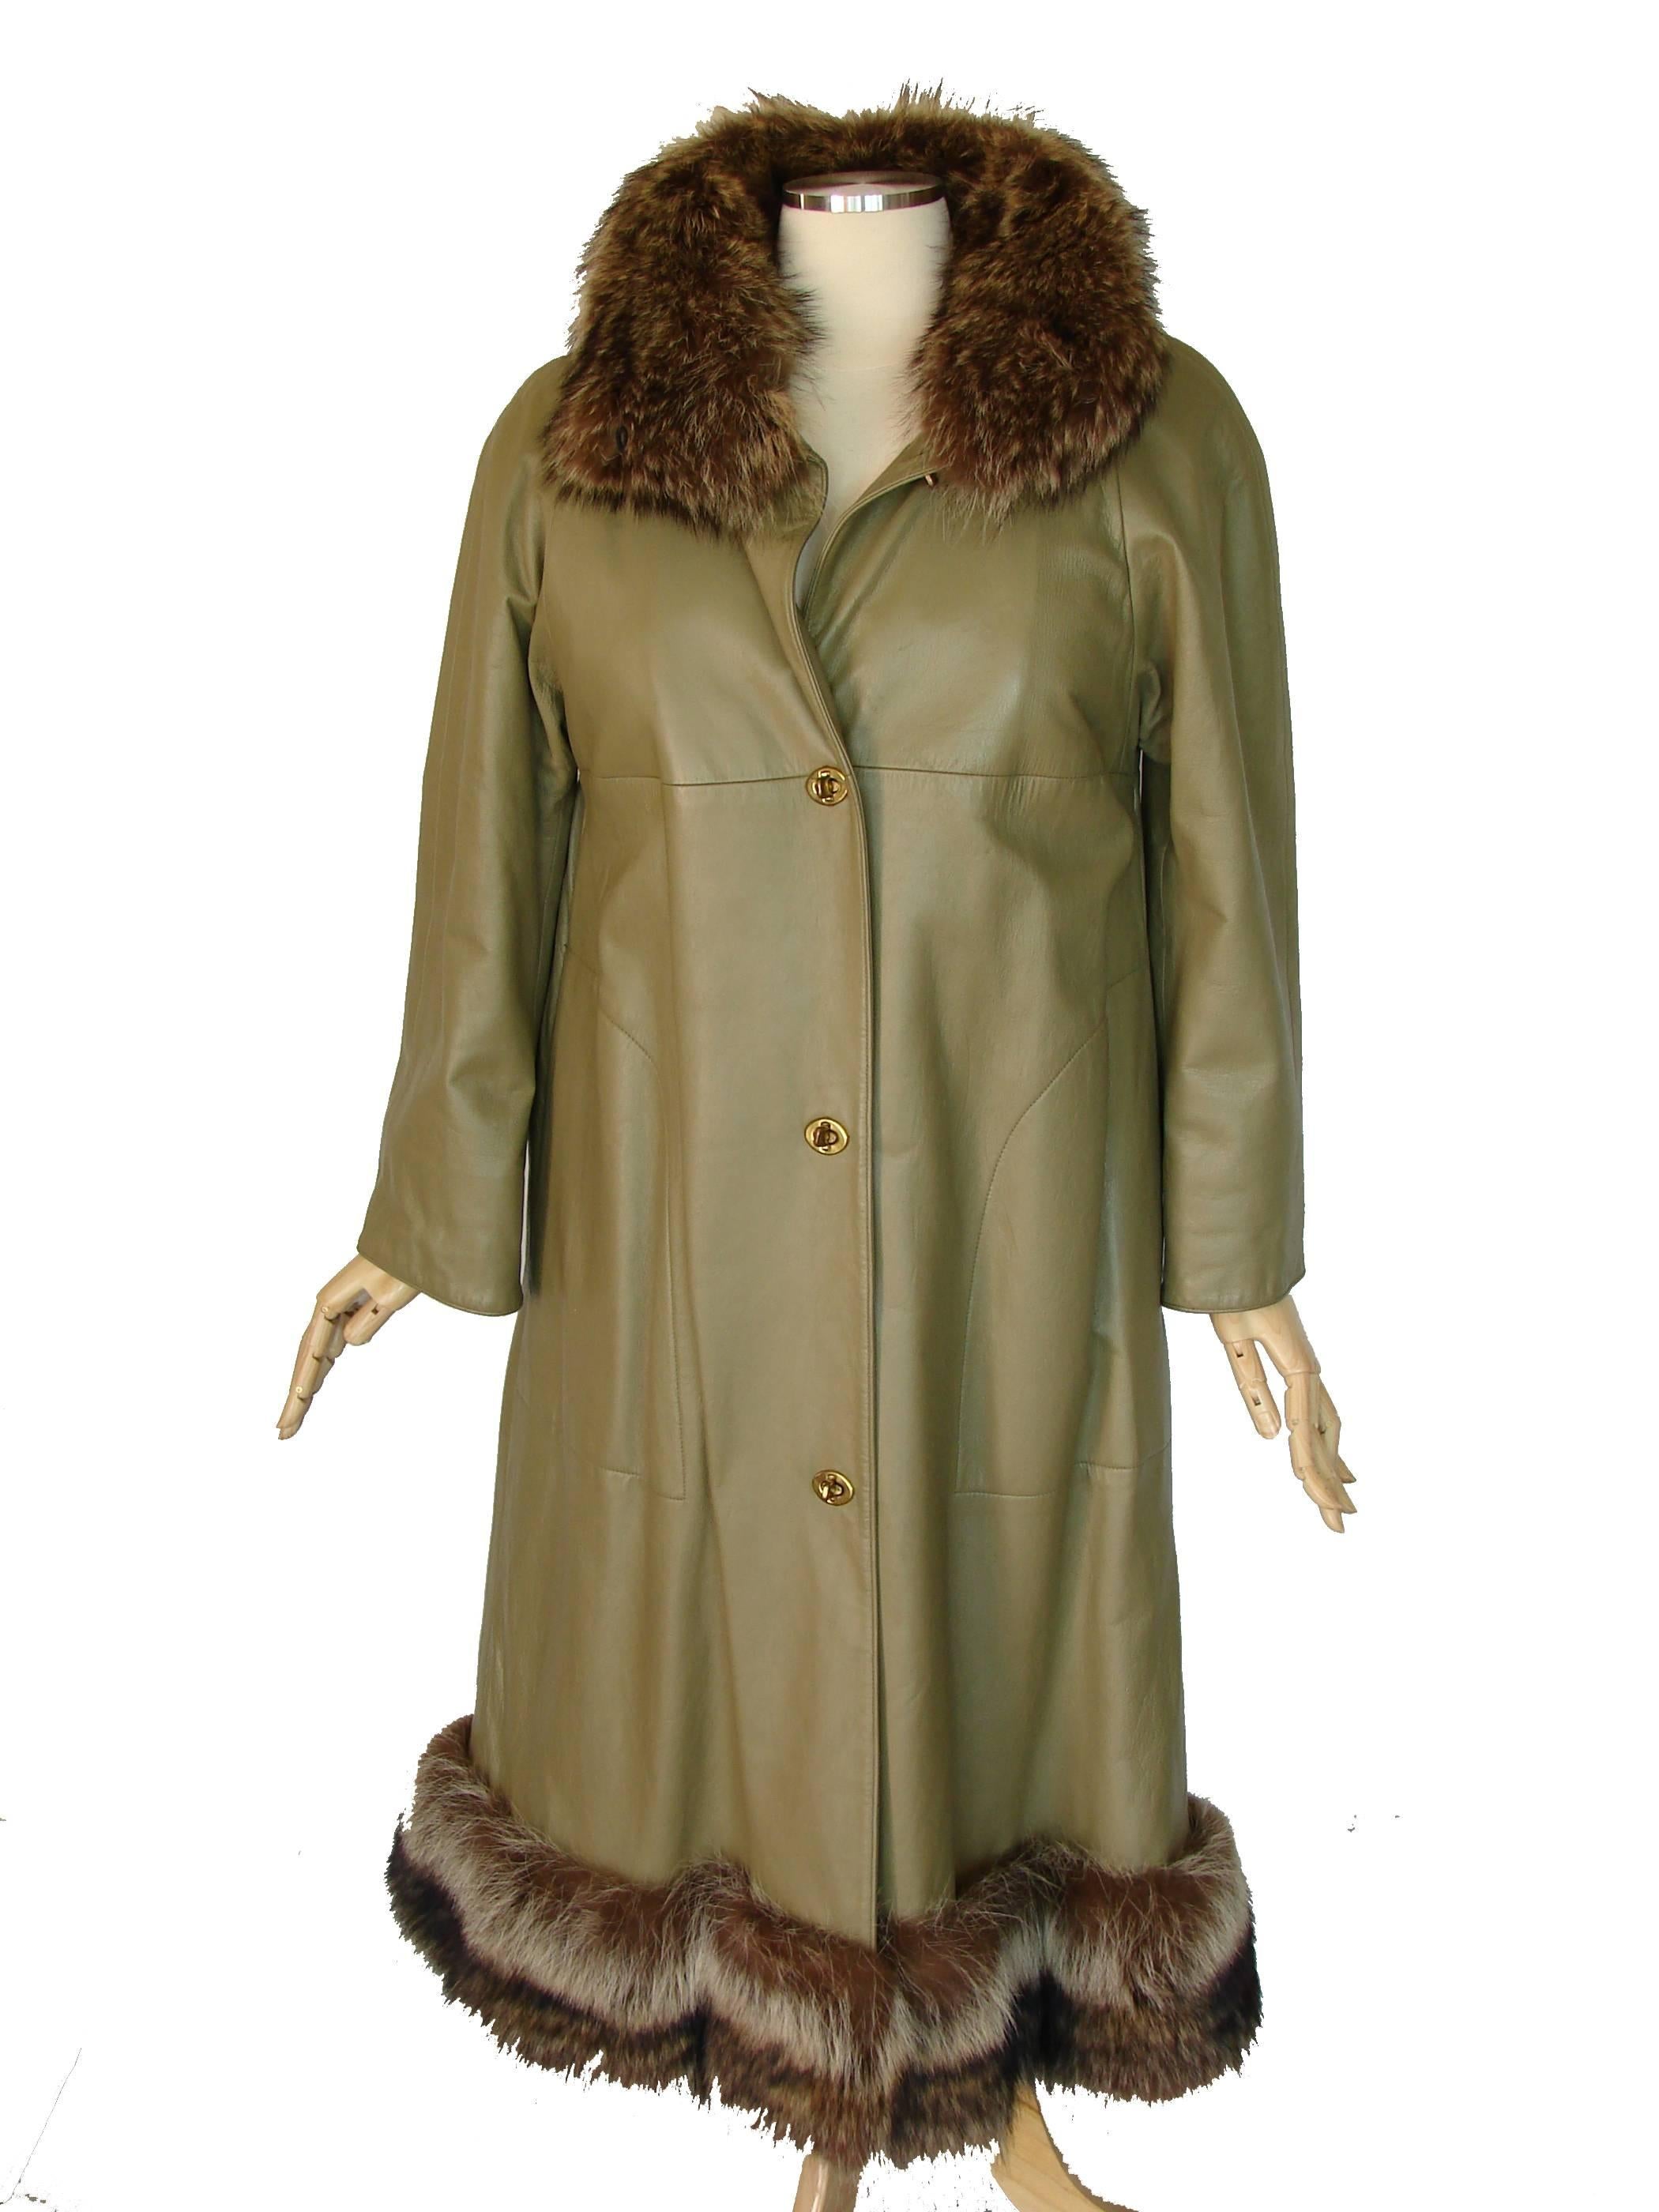 Bonnie Cashin for Sills Leather Swing Coat with Raccoon Fur Trim 1960s Sz M 1